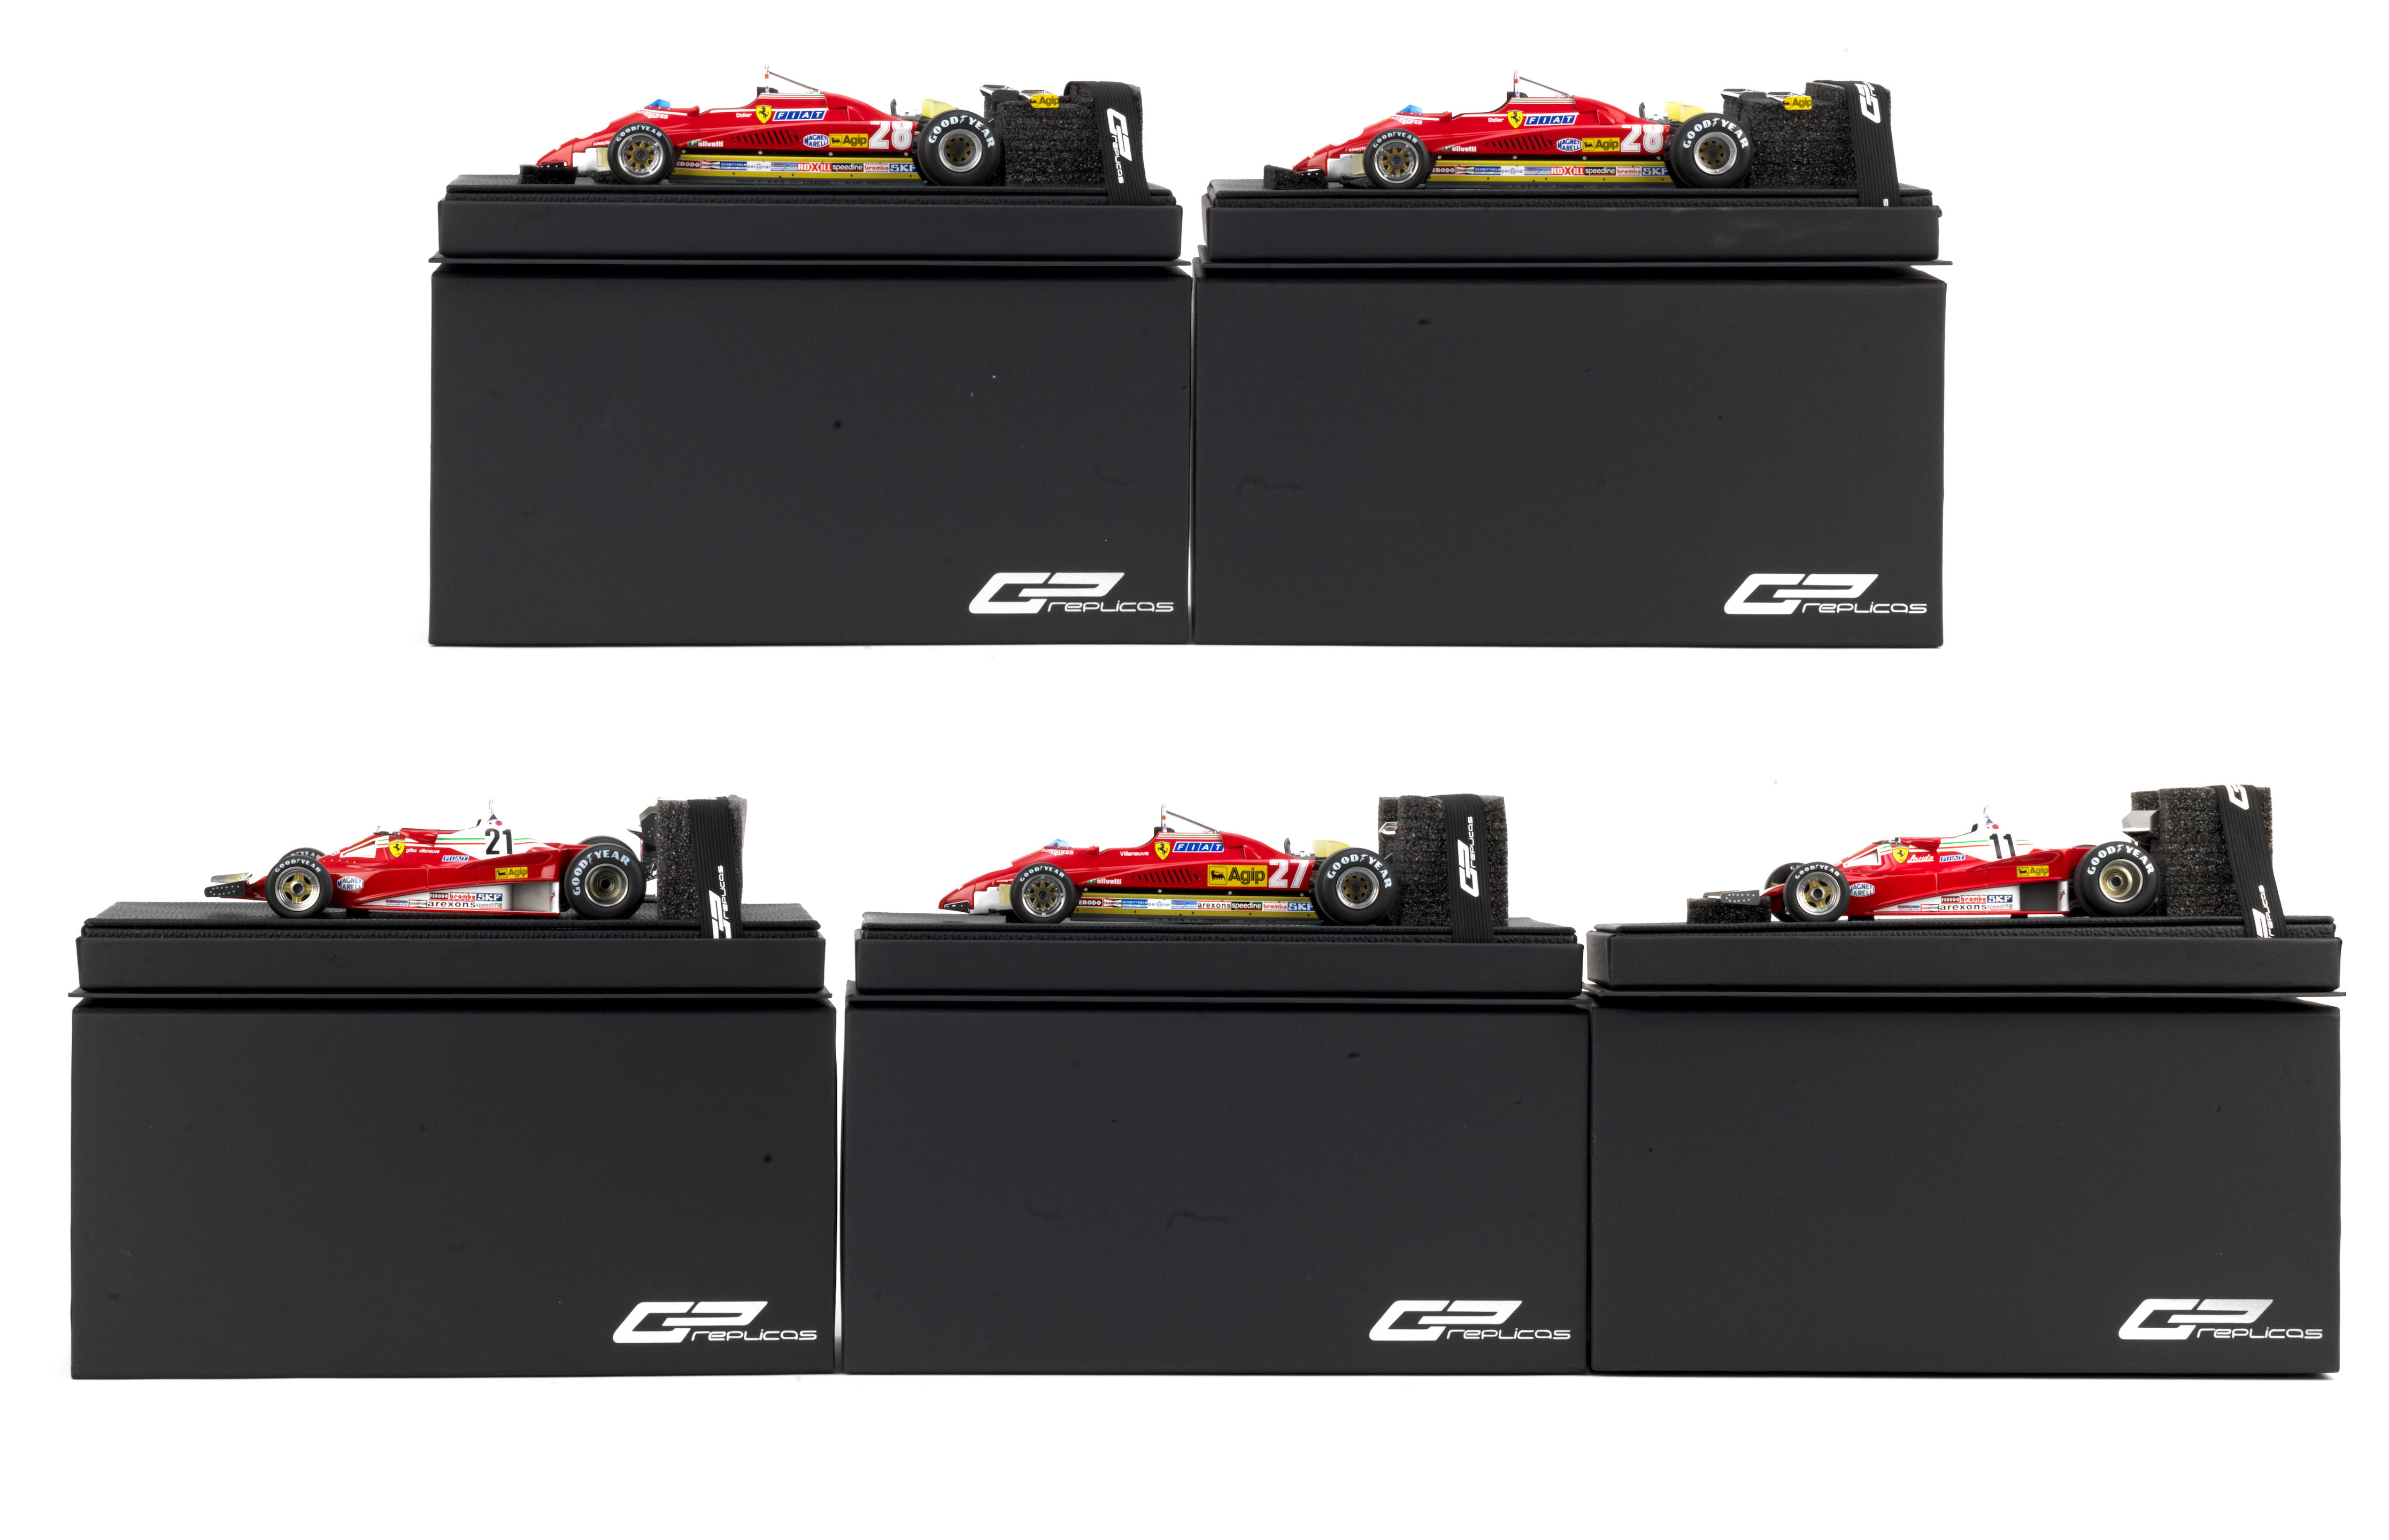 Bonhams Cars : Five boxed 118 scale limited edition models of Ferrari ...